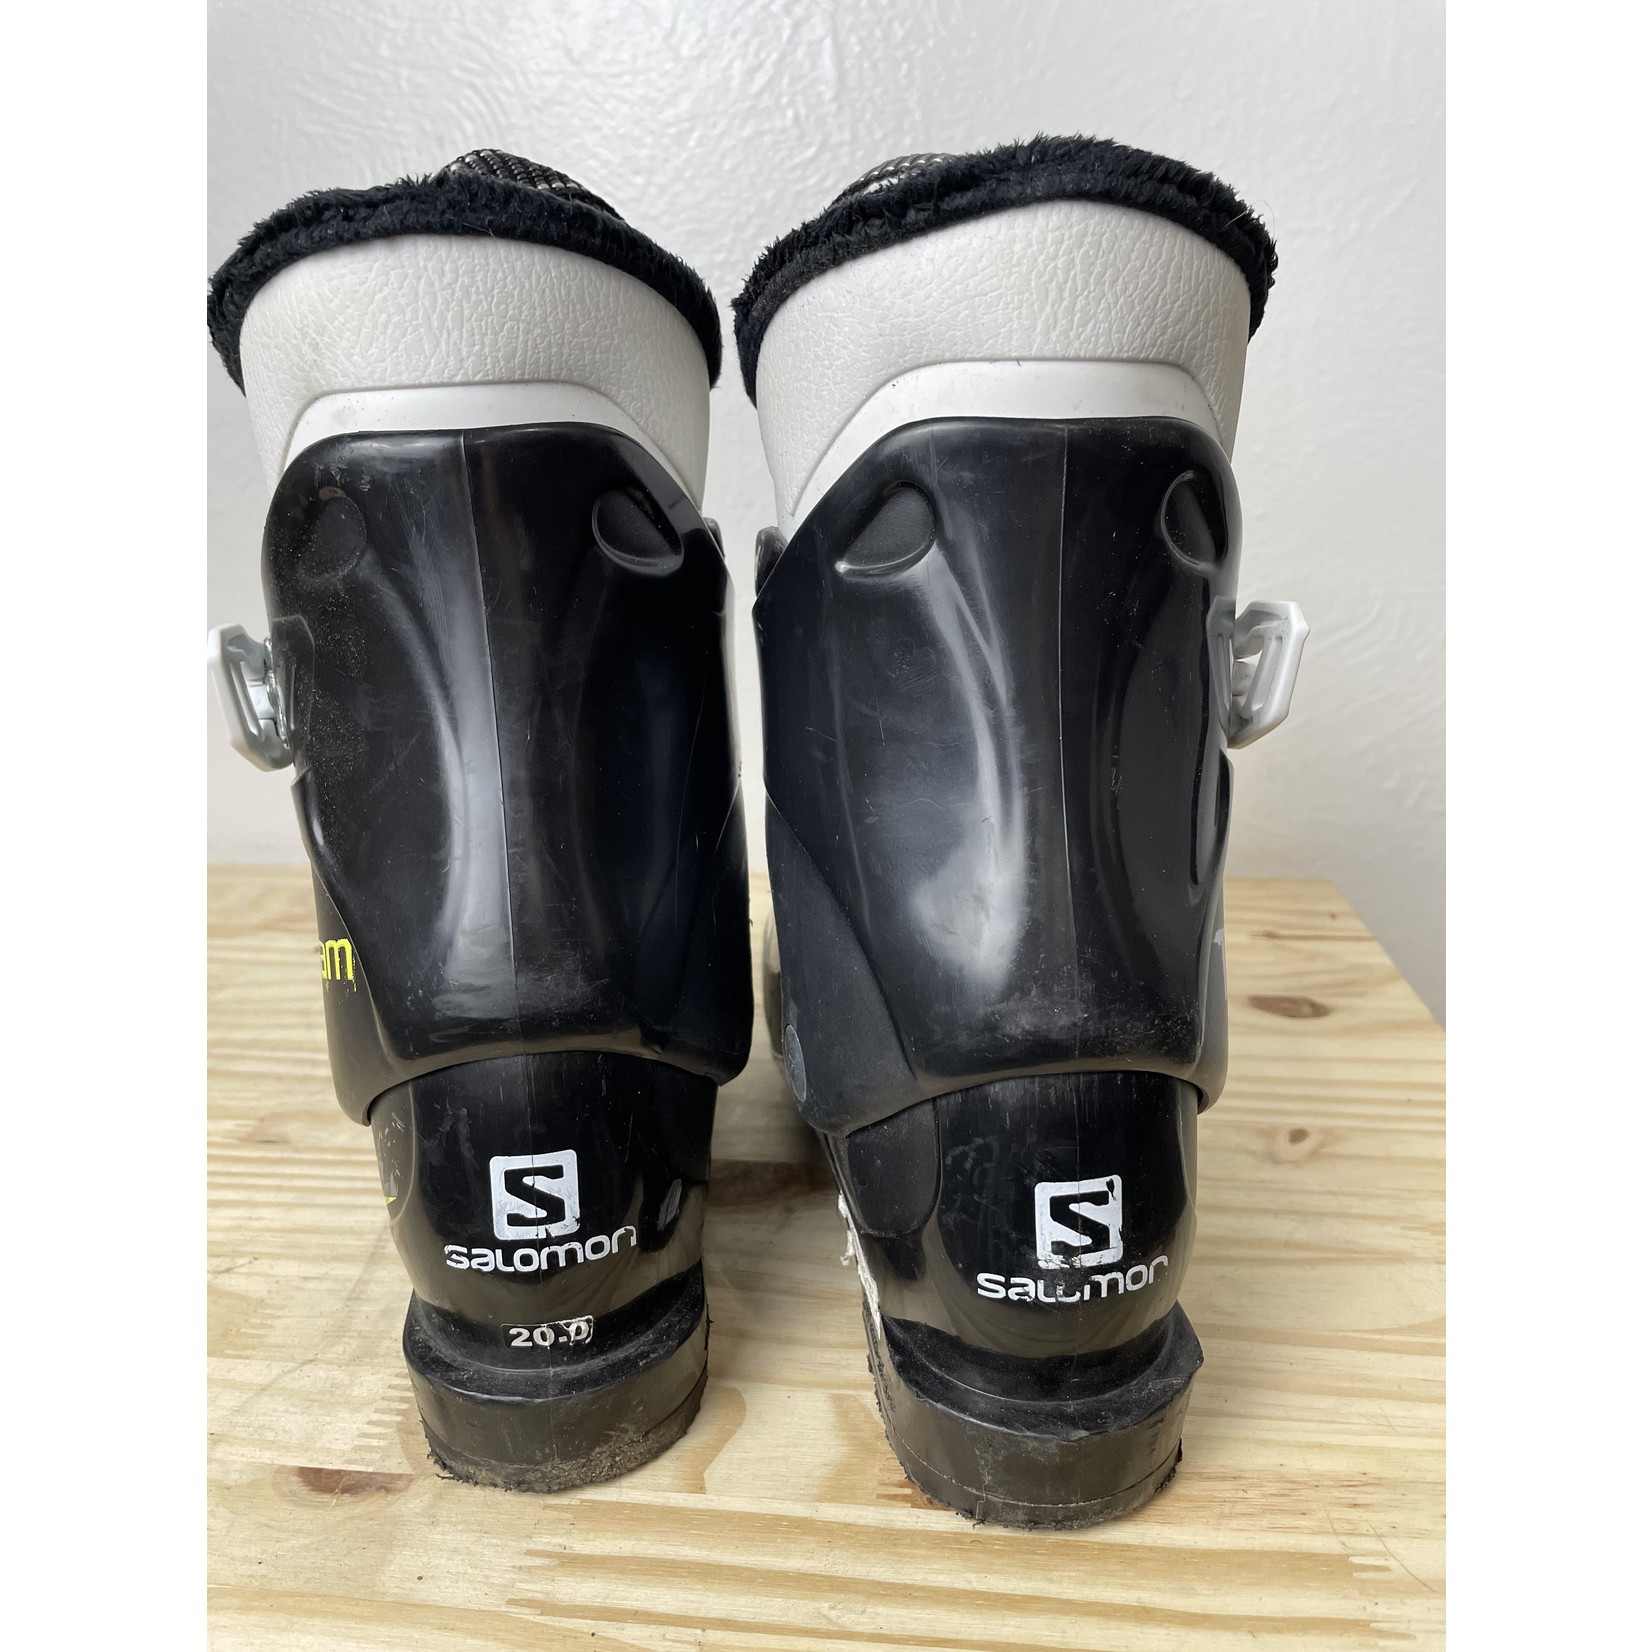 Salomon Salomon Team Kids Ski Boots, Size 20